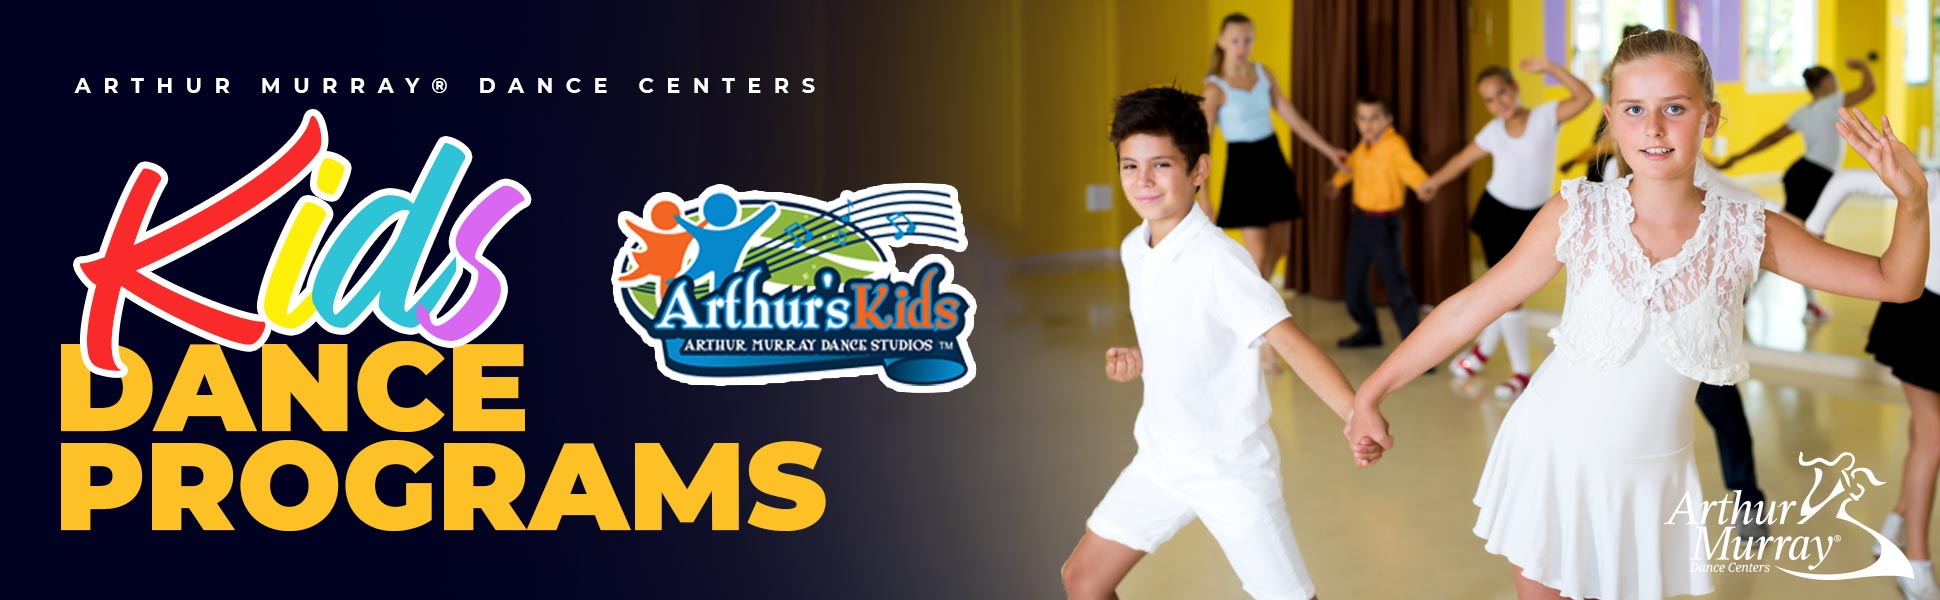 Arthur Murray Kids Dance Lessons